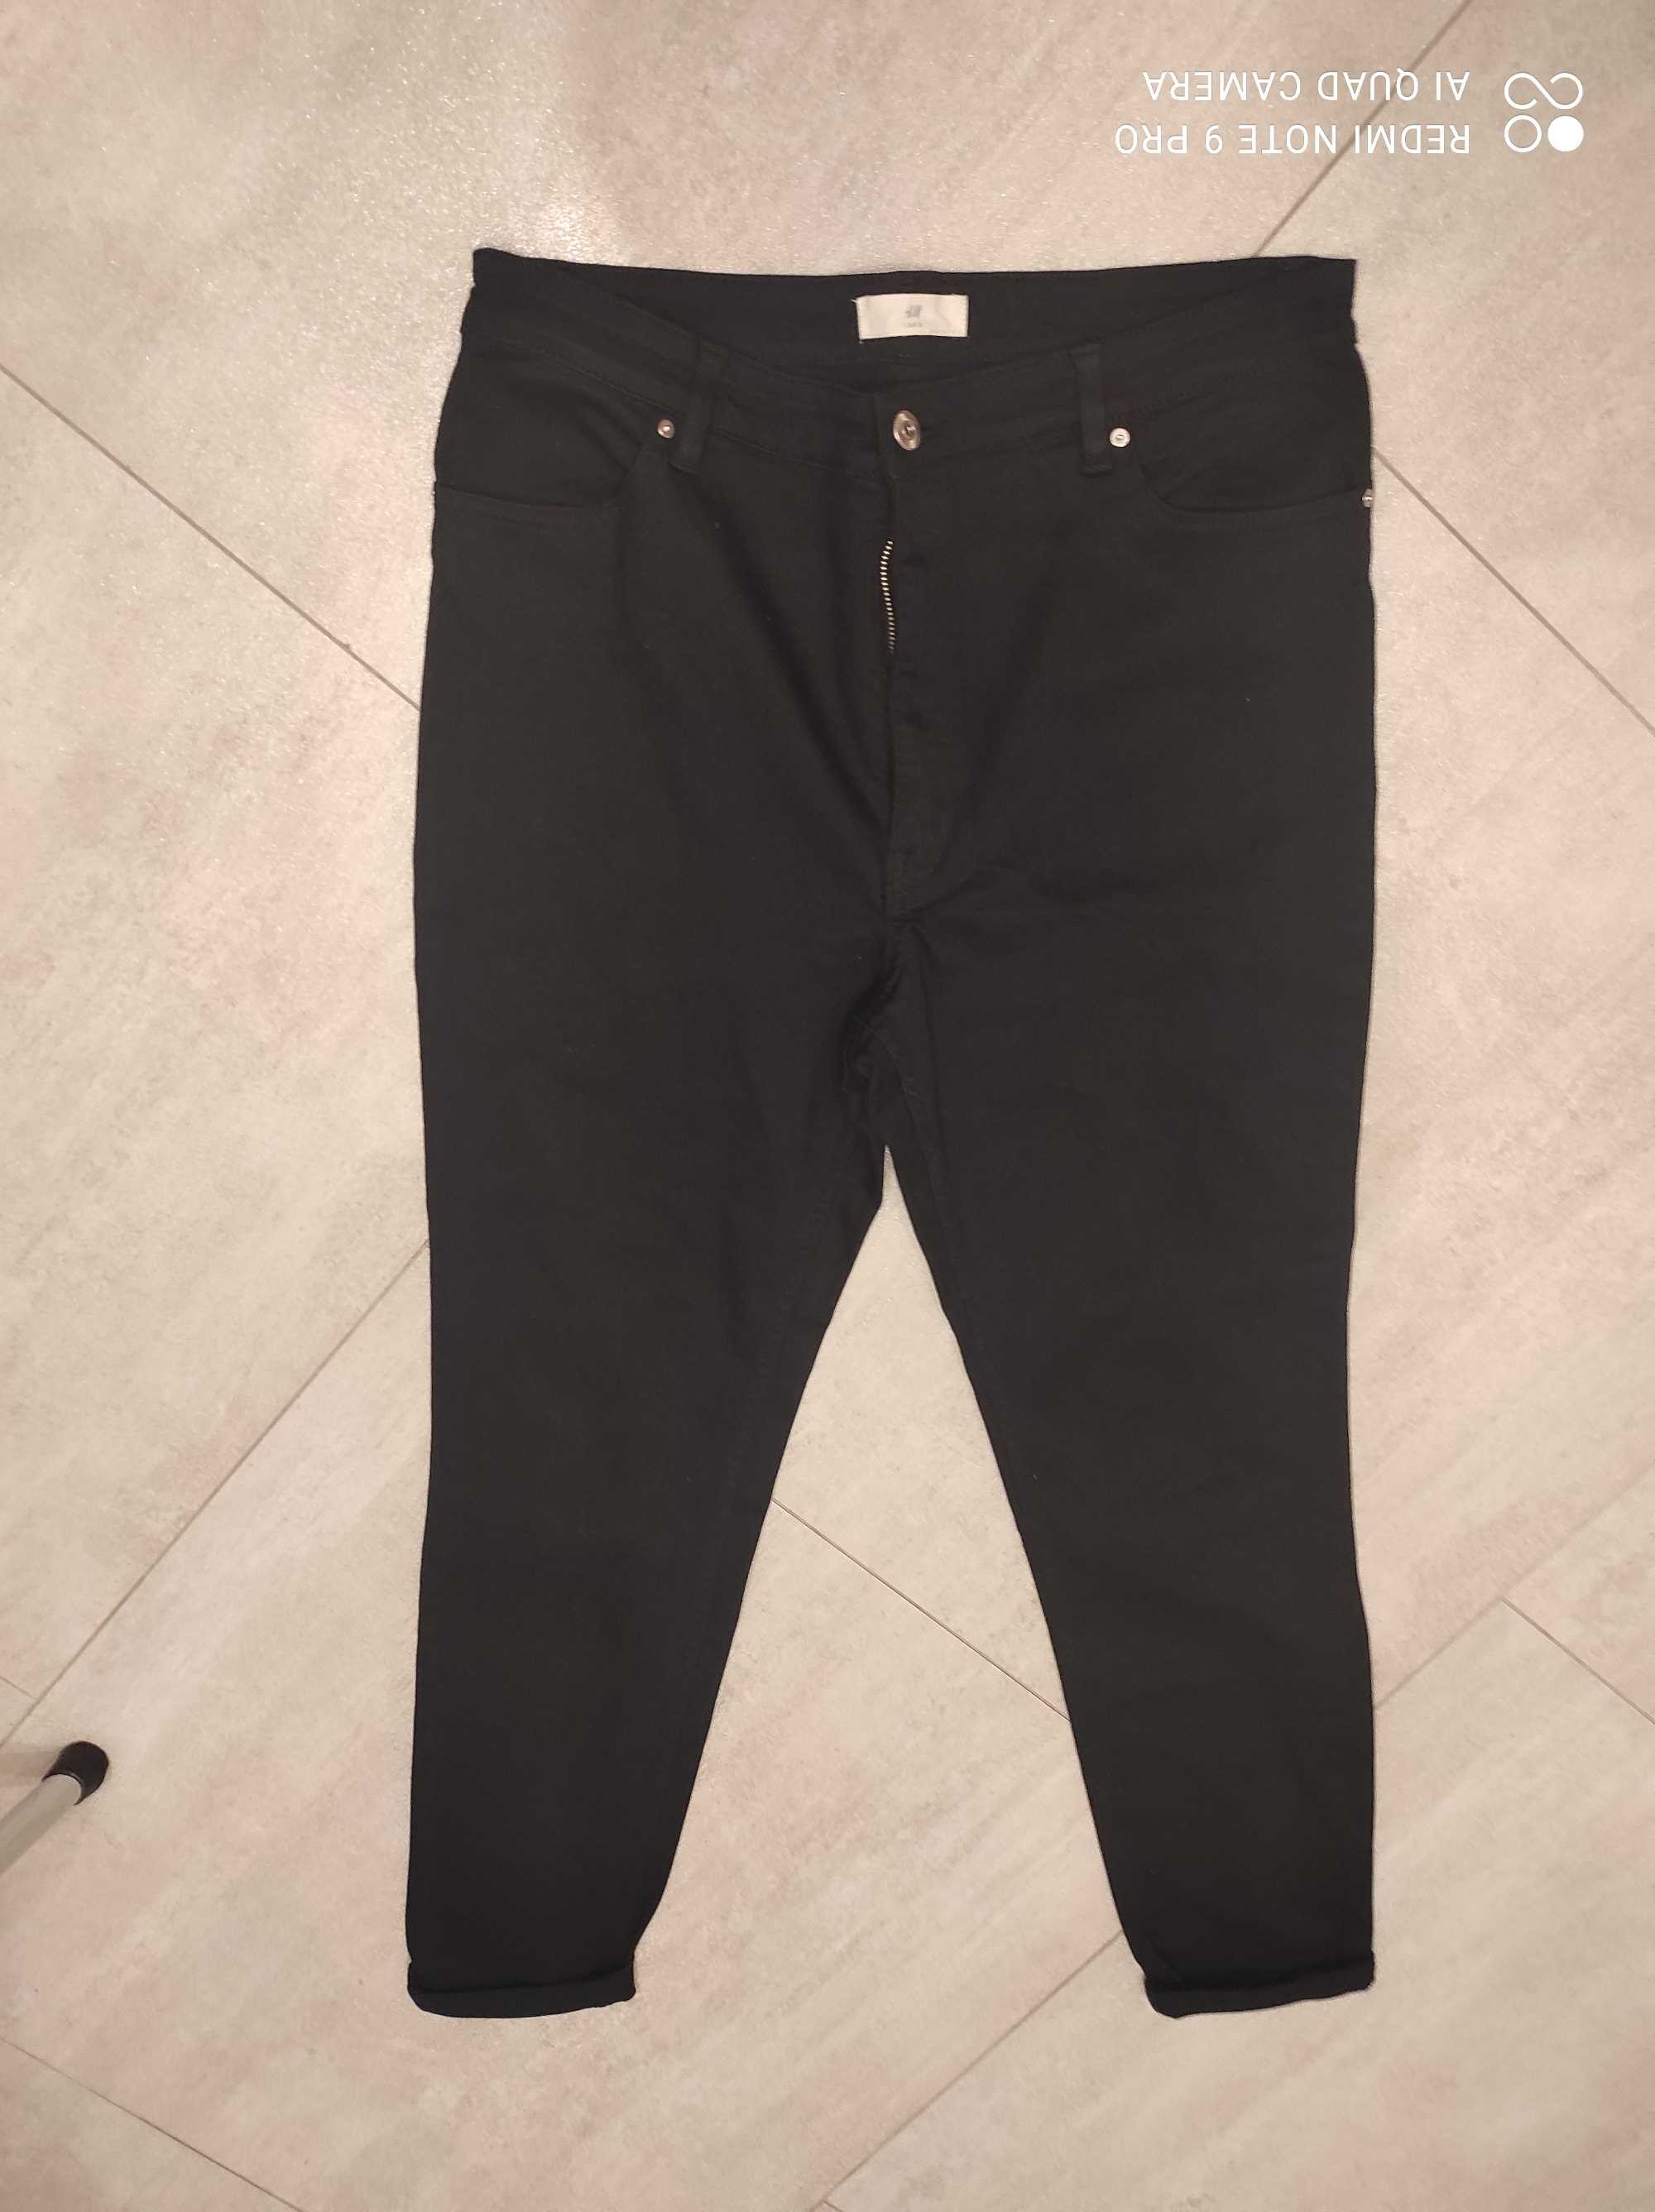 Spodnie H&M  roz.40/42 czarne